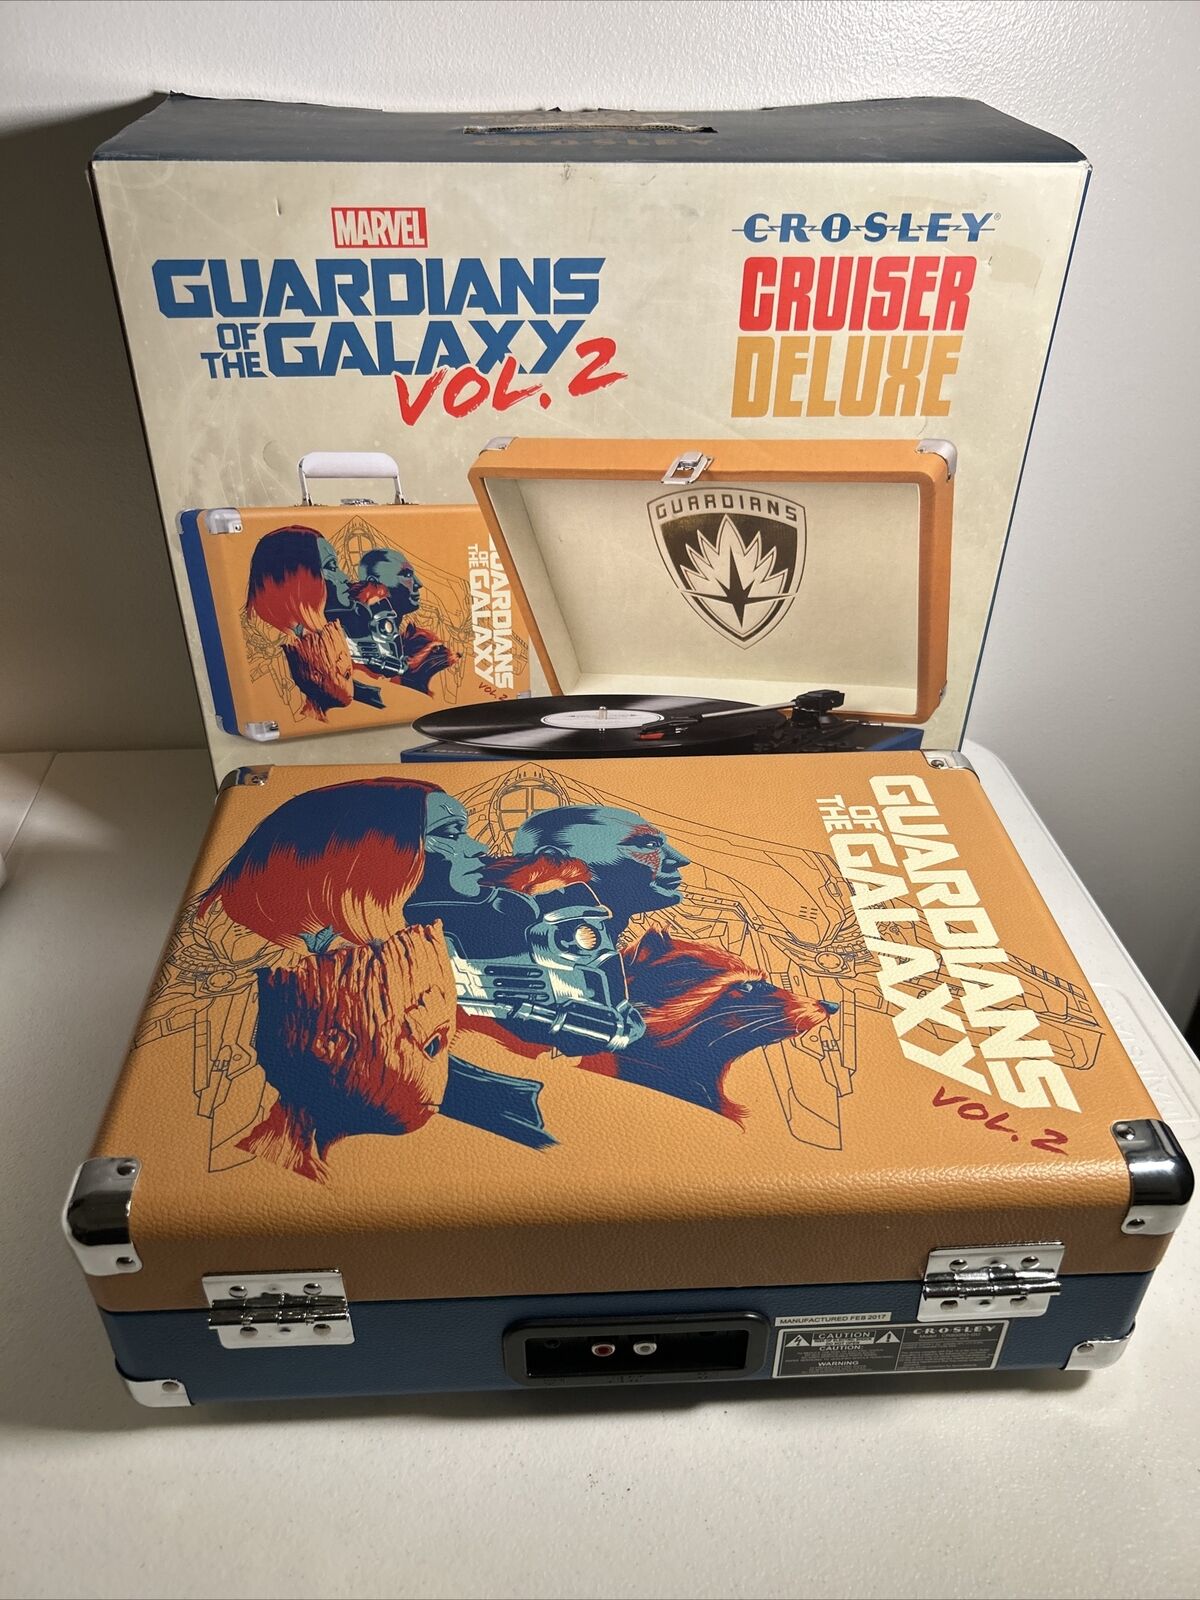 Crosley Cruiser Deluxe Guardians Of The Galaxy Vol 2 Edition- Rare- Fast Ship